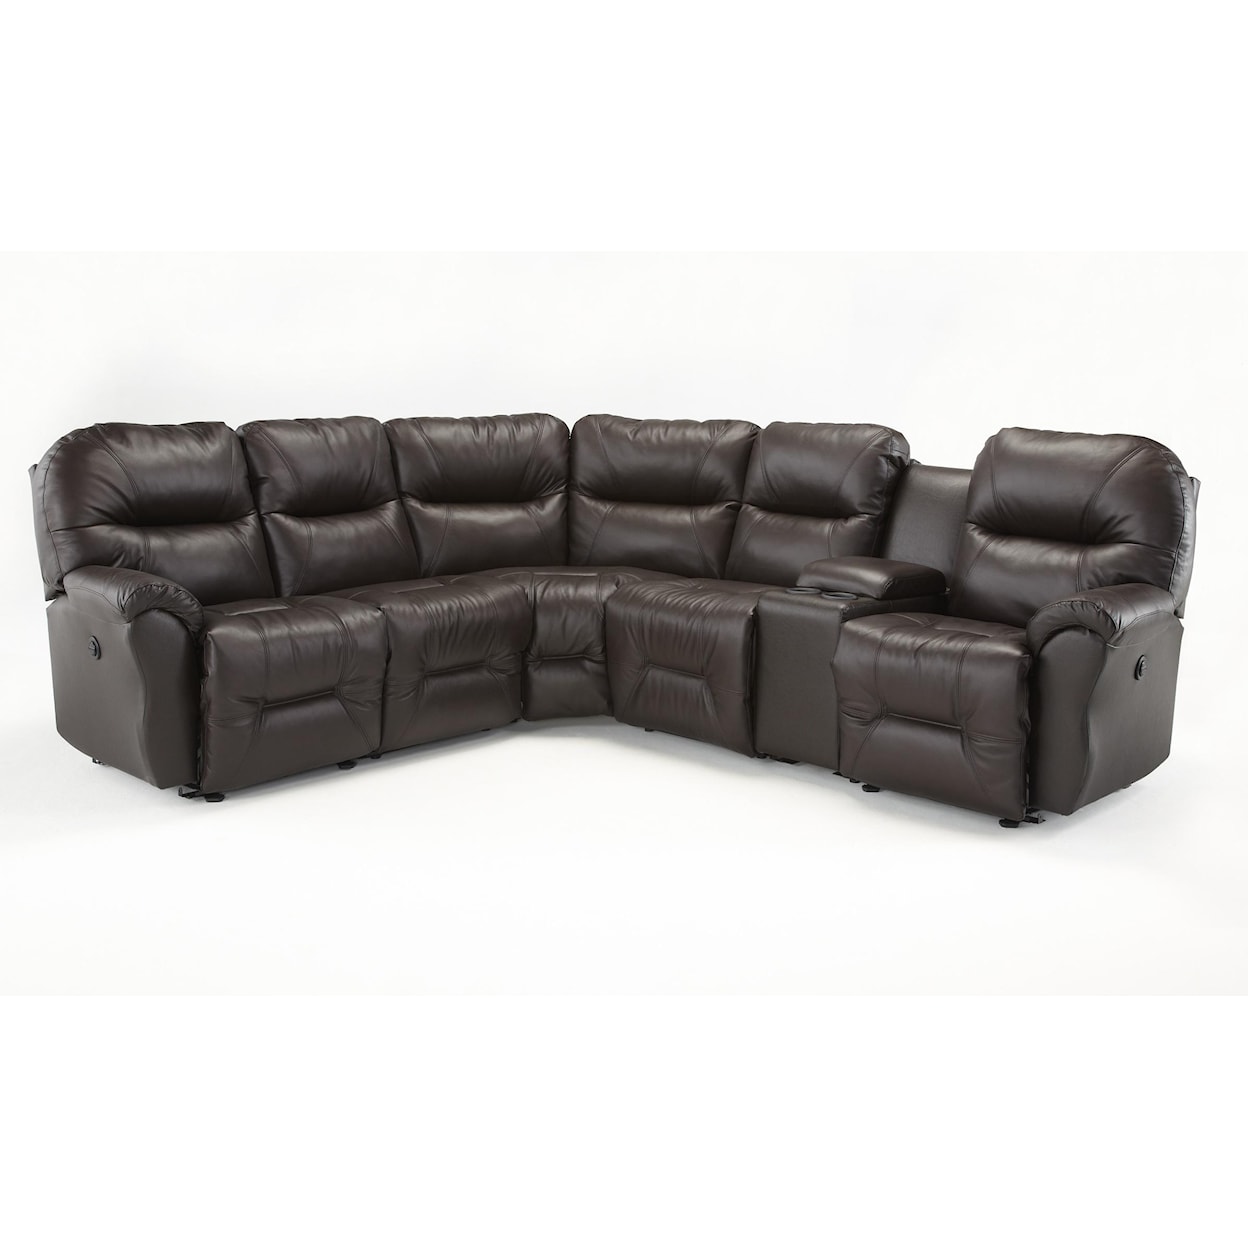 Bravo Furniture Bodie 6 Pc Reclining Sectional Sofa